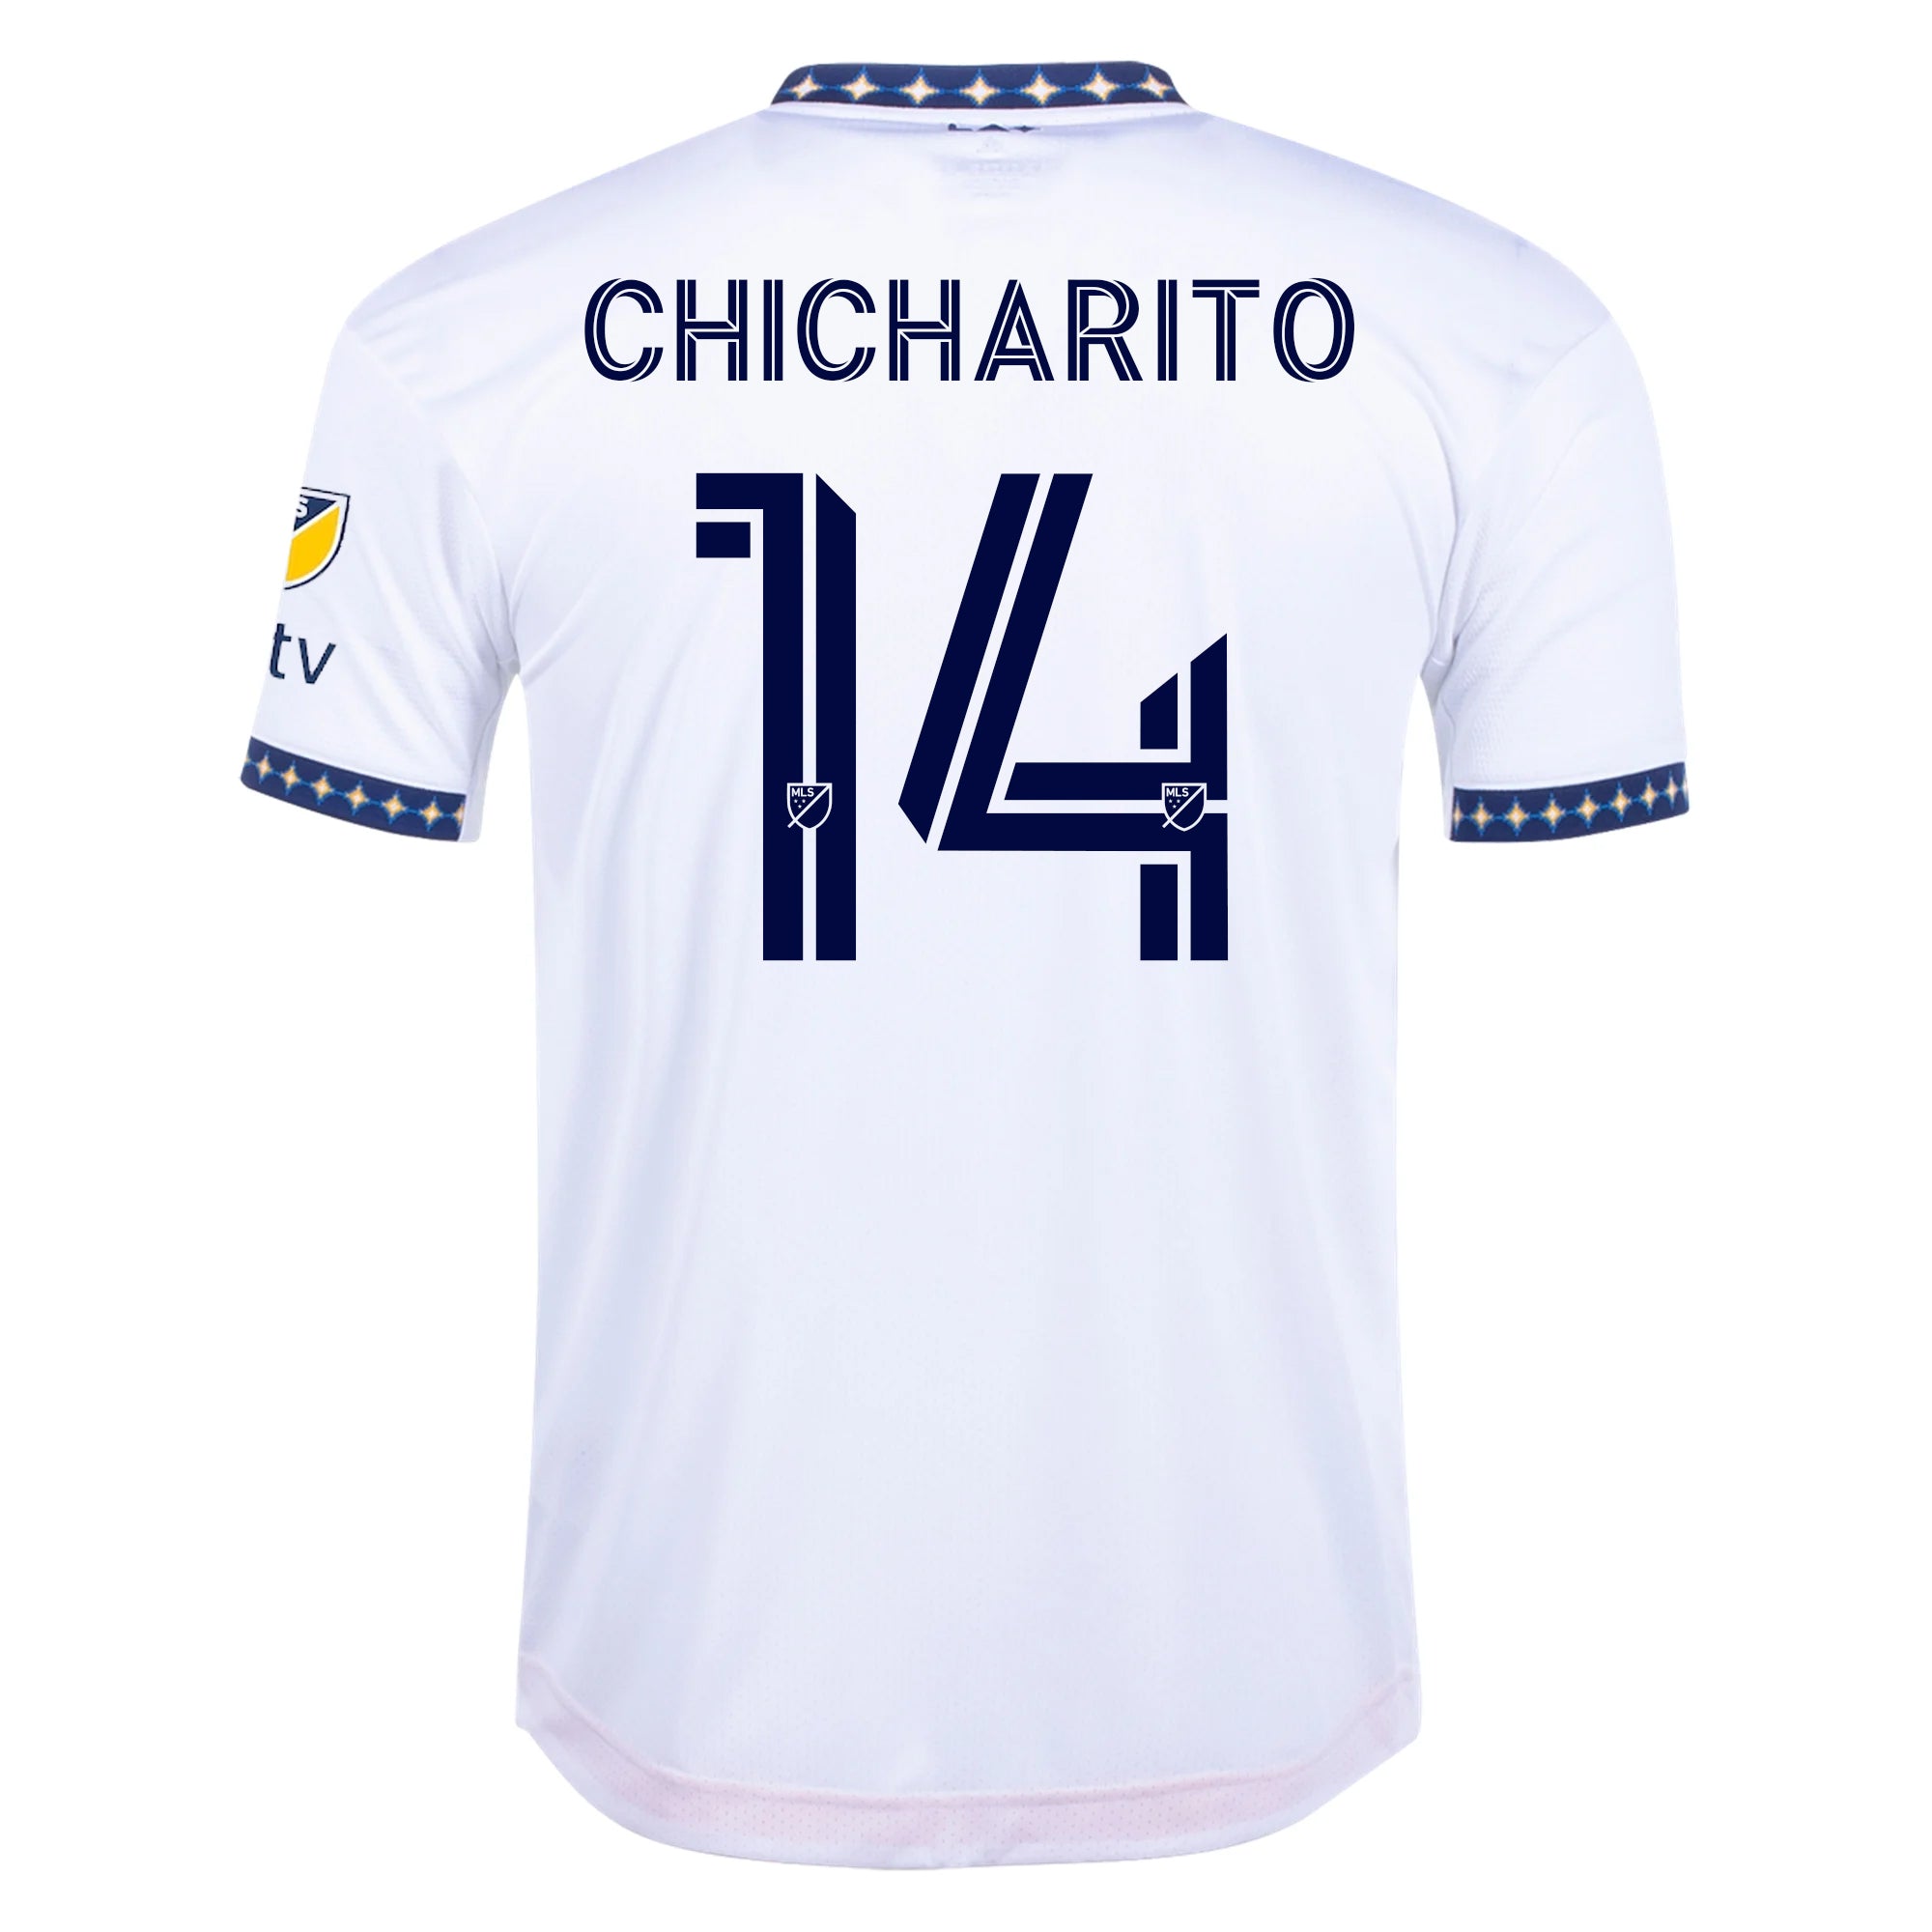 chicharito youth jersey